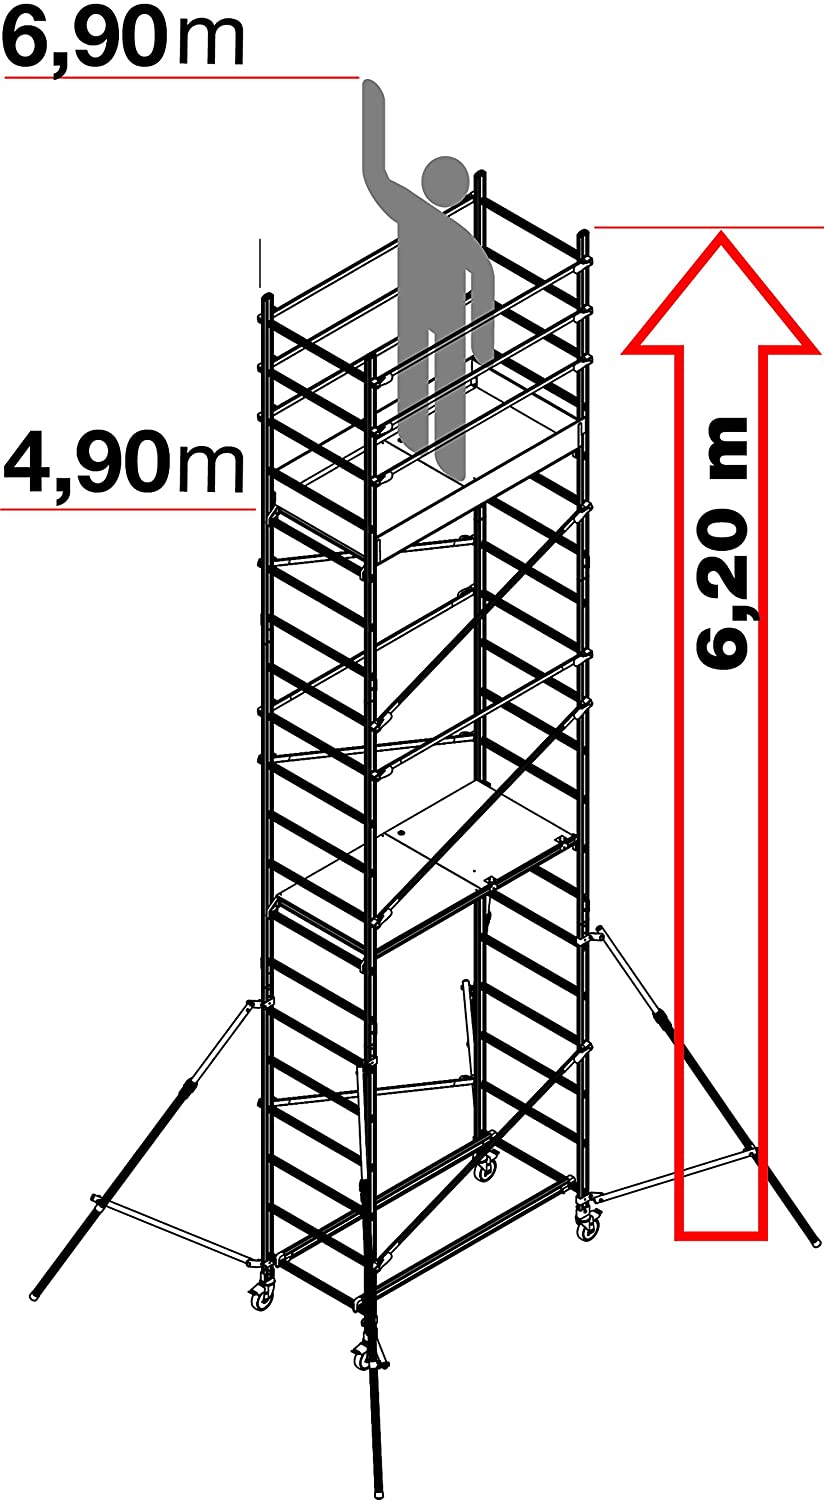  Fahrgerüst "Alto" klappbar S100 6,90 m Arbeitshöhe